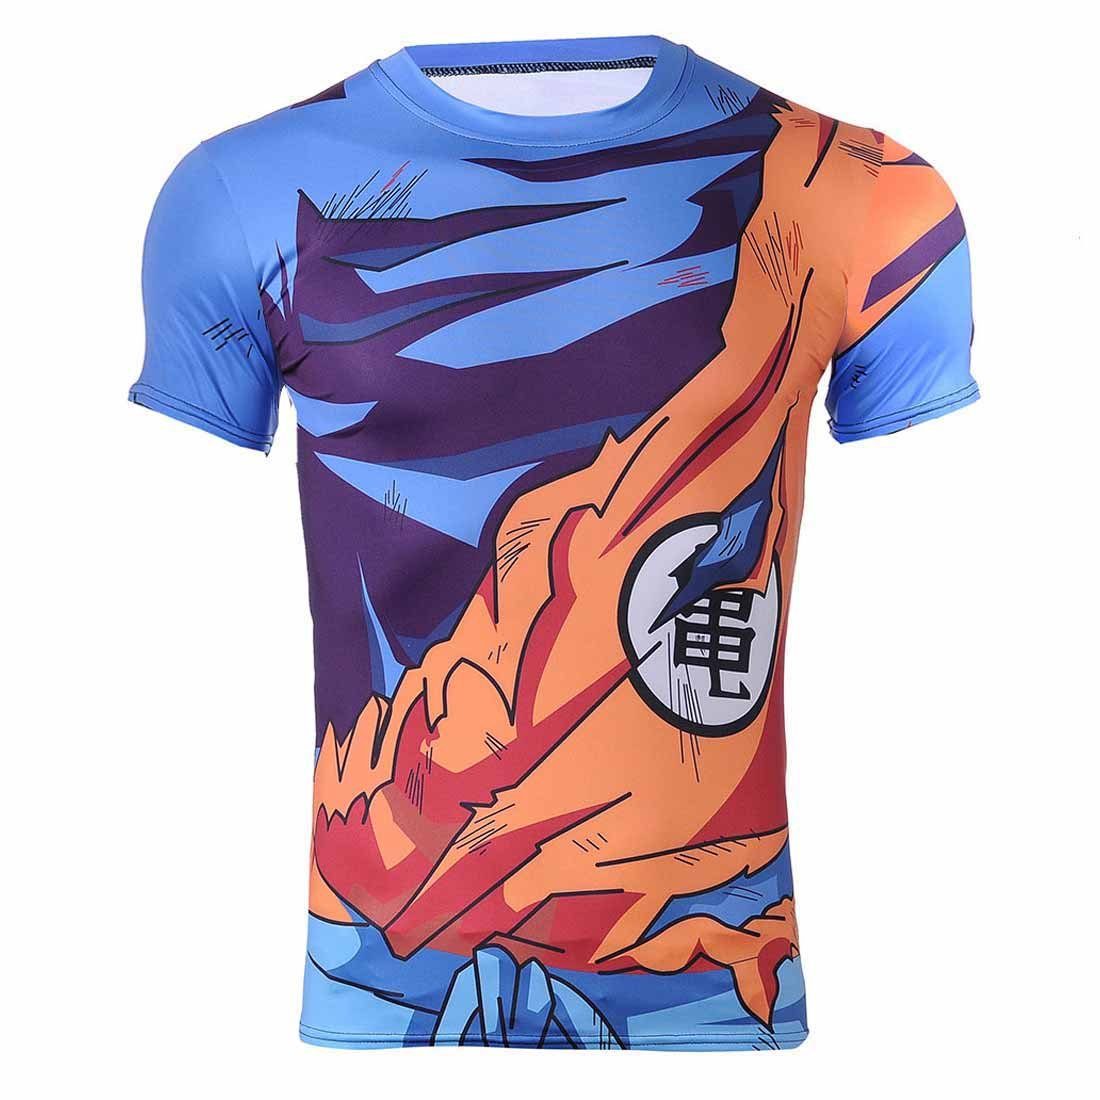 GalaxyCat Kostüm Super Saiyajin Cosplay T-Shirt, Goku Kostüm für, Cosplay T- Shirt von Son Goku